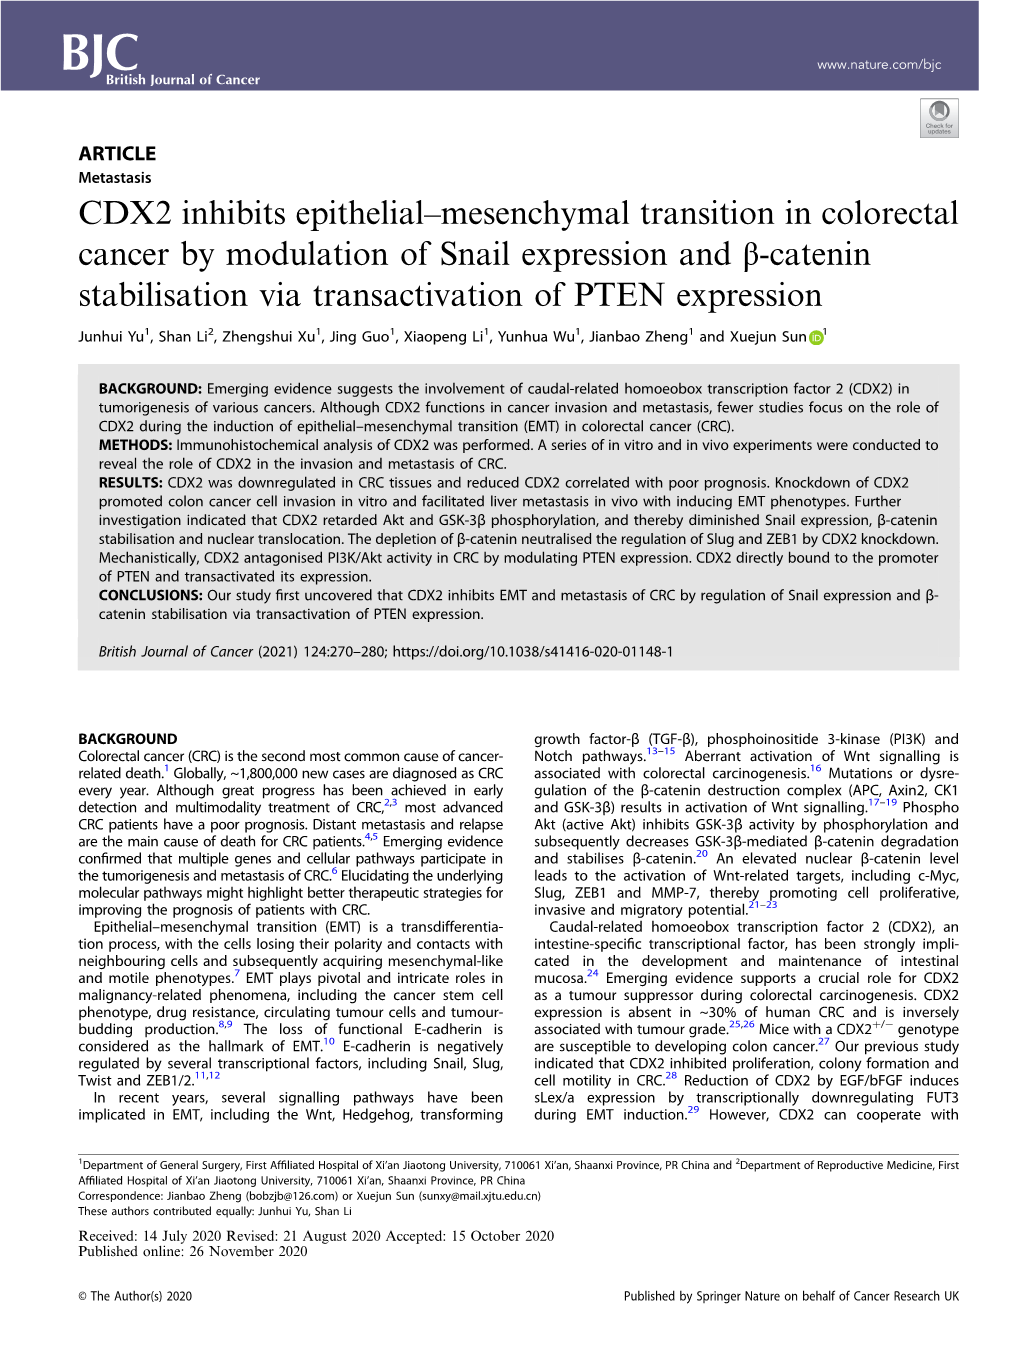 CDX2 Inhibits Epithelialâ€“Mesenchymal Transition In